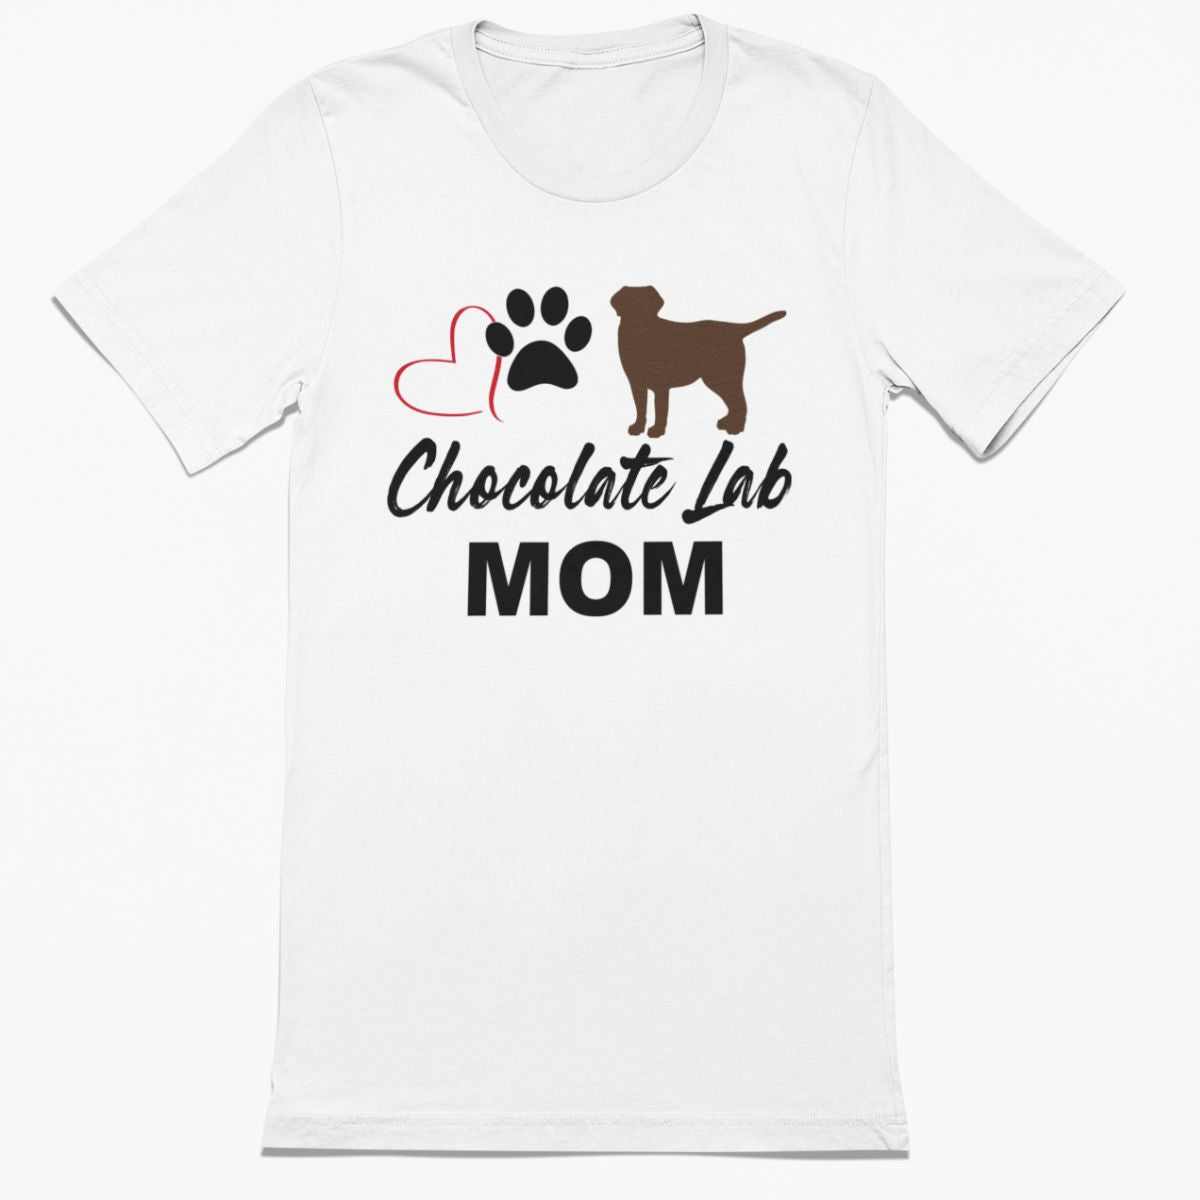 Chocolate Lab Mom Shirt